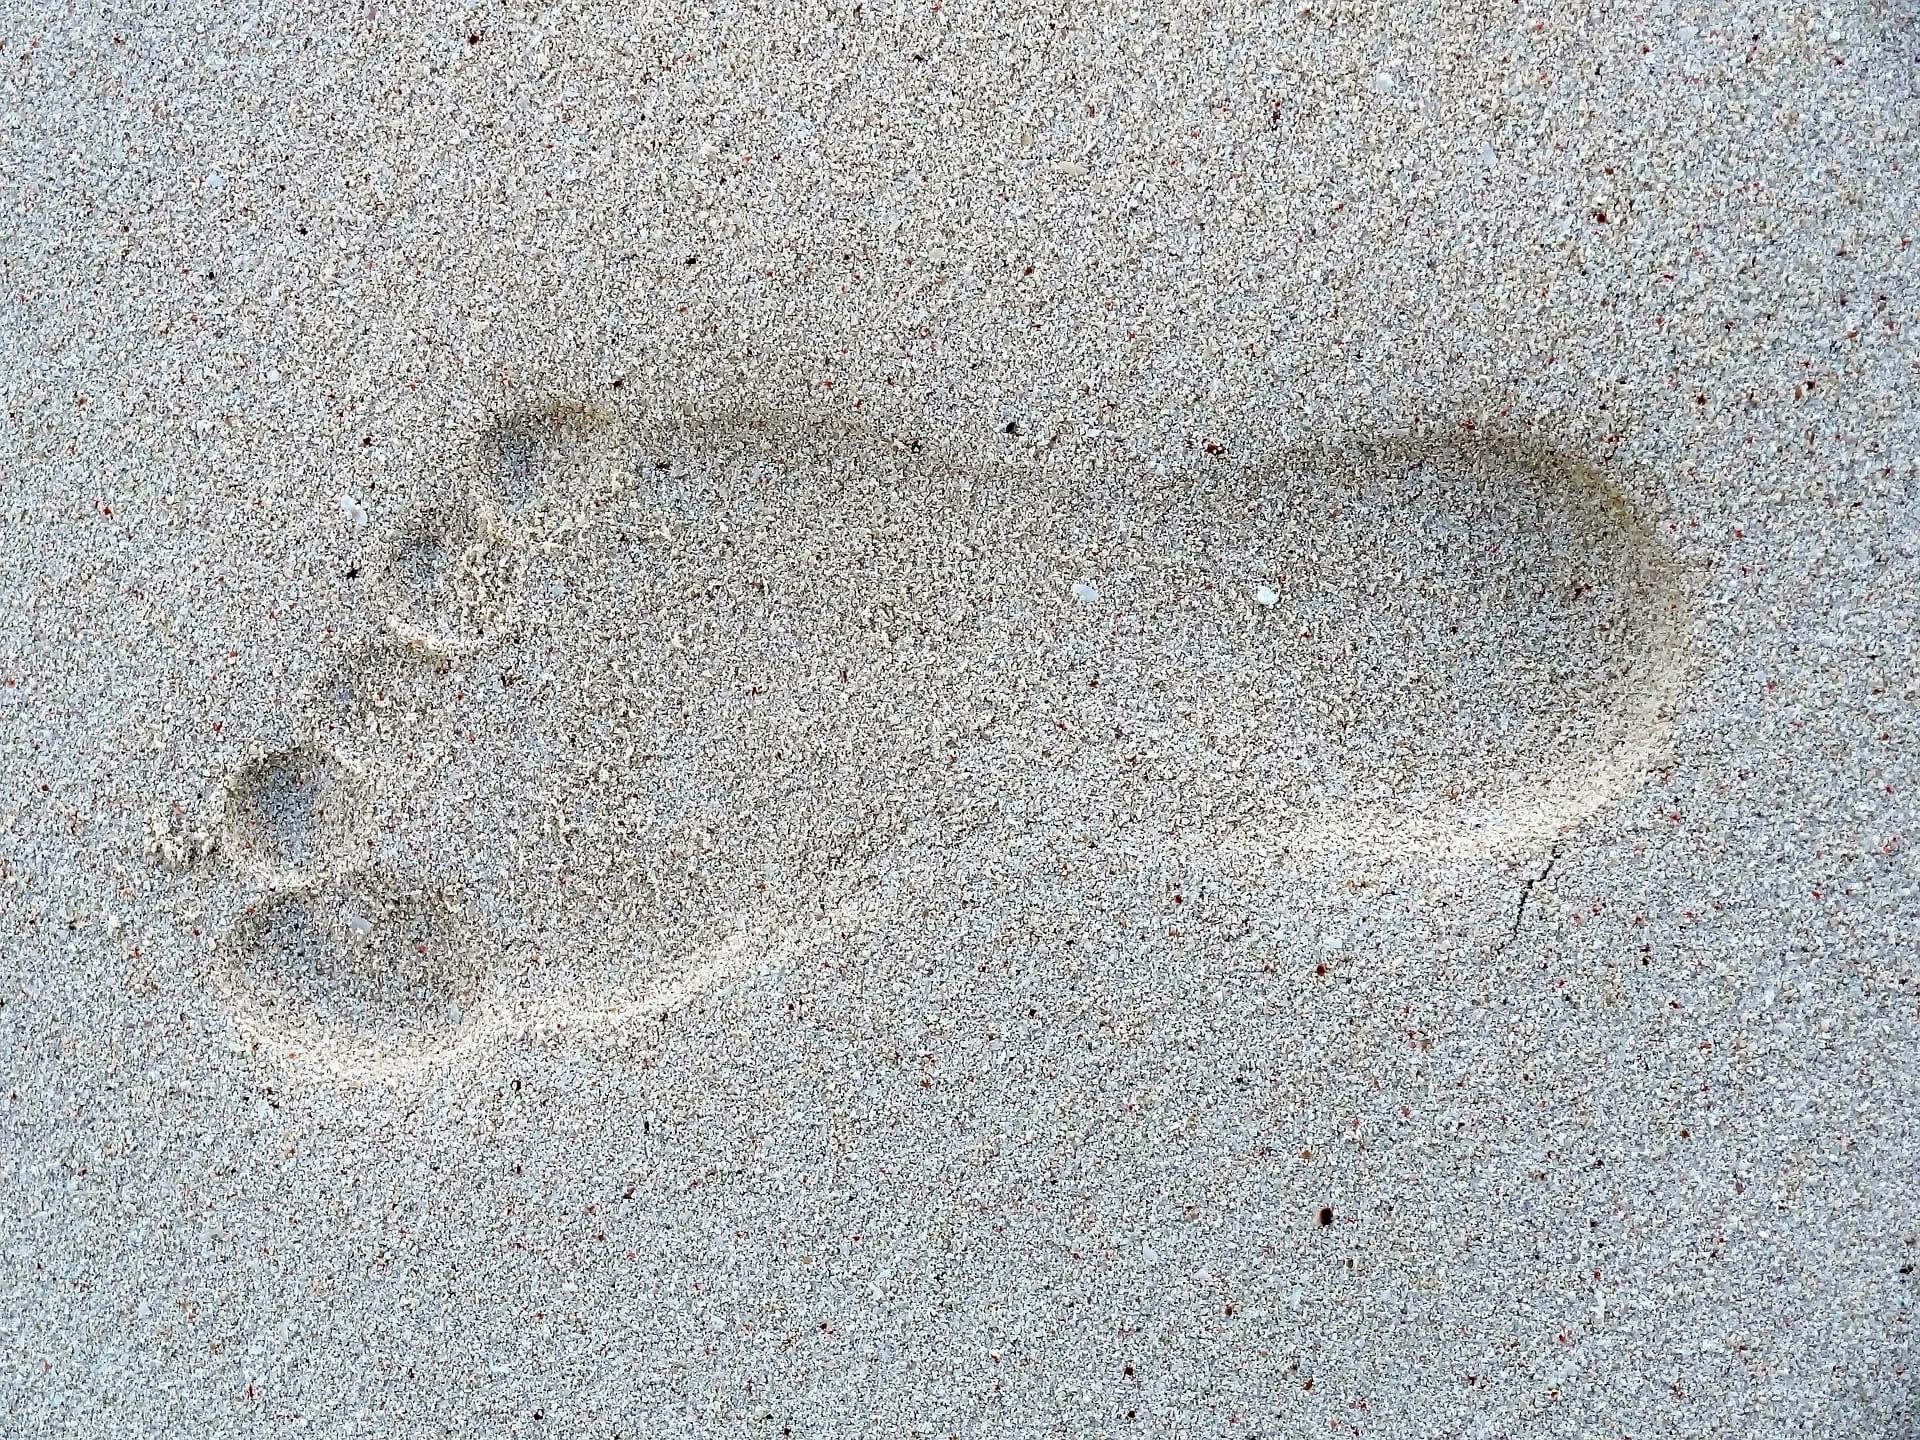 footprints in the sand tattoo on feet